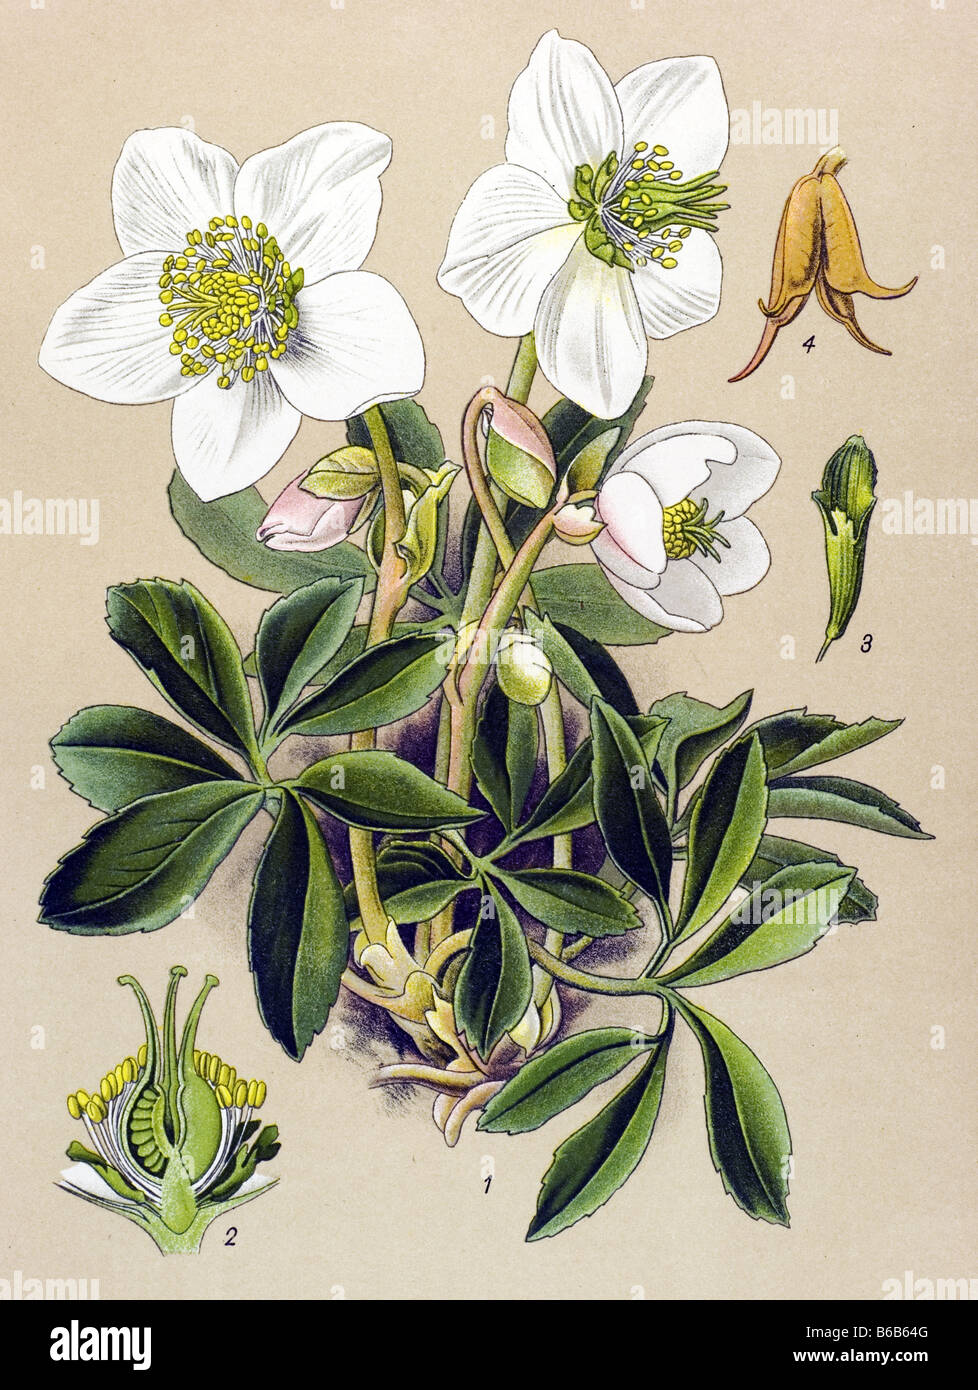 Hellebore, Helleborus niger poisonous plants illustrations Stock Photo